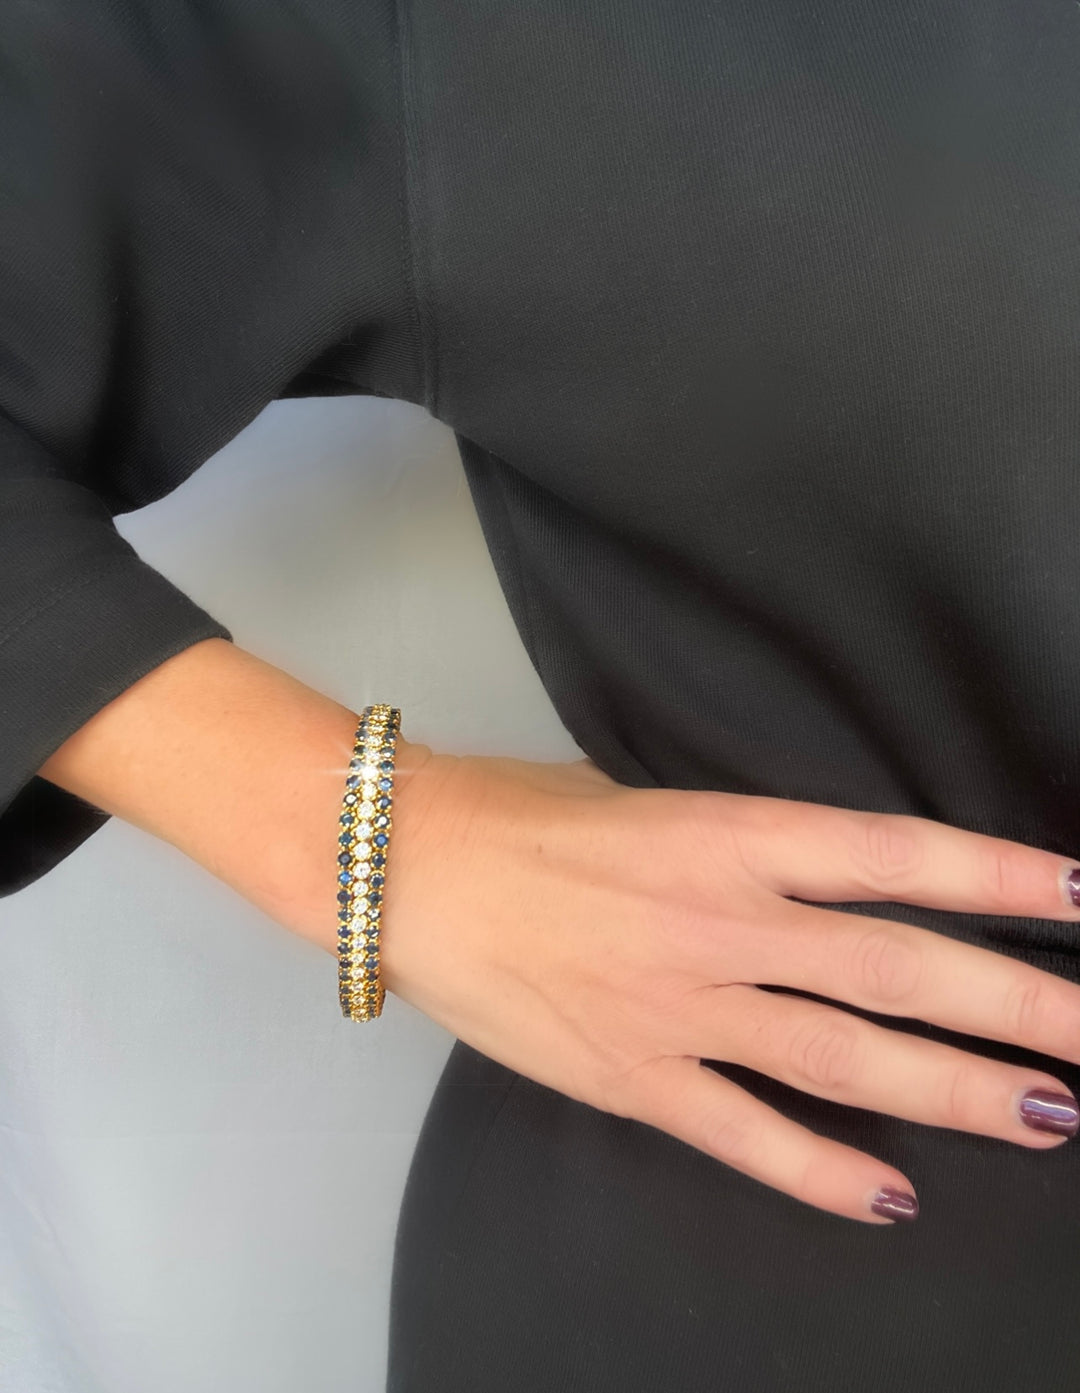 Sapphire, Diamond and 18K Yellow Gold Bracelet